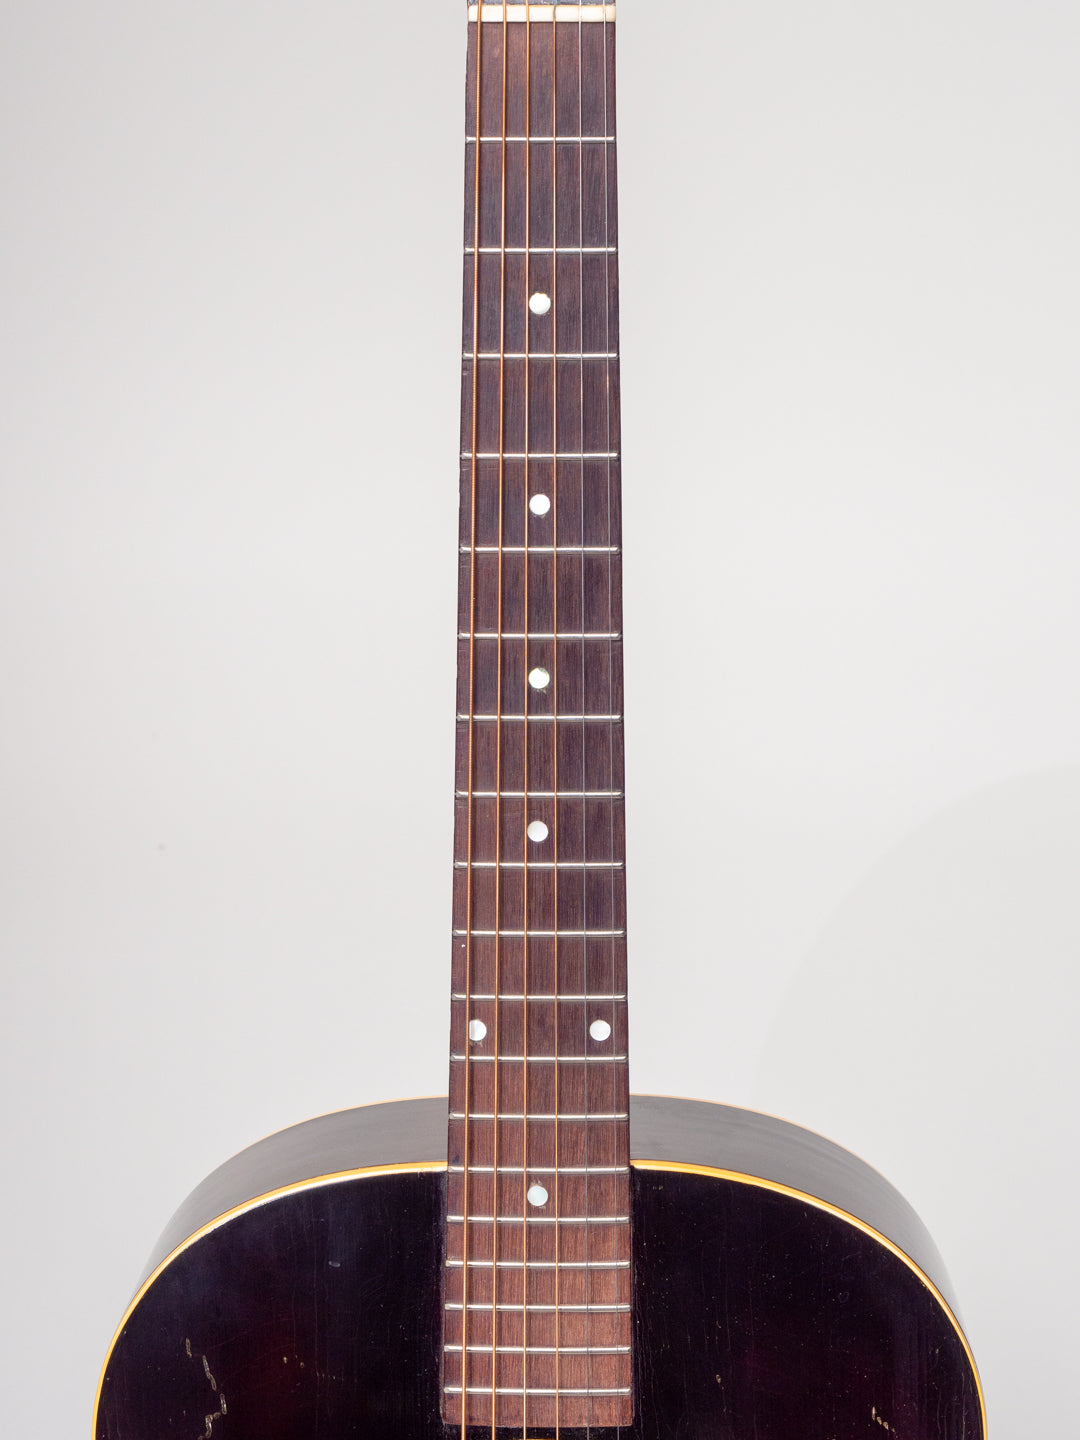 1945 Gibson LG-2